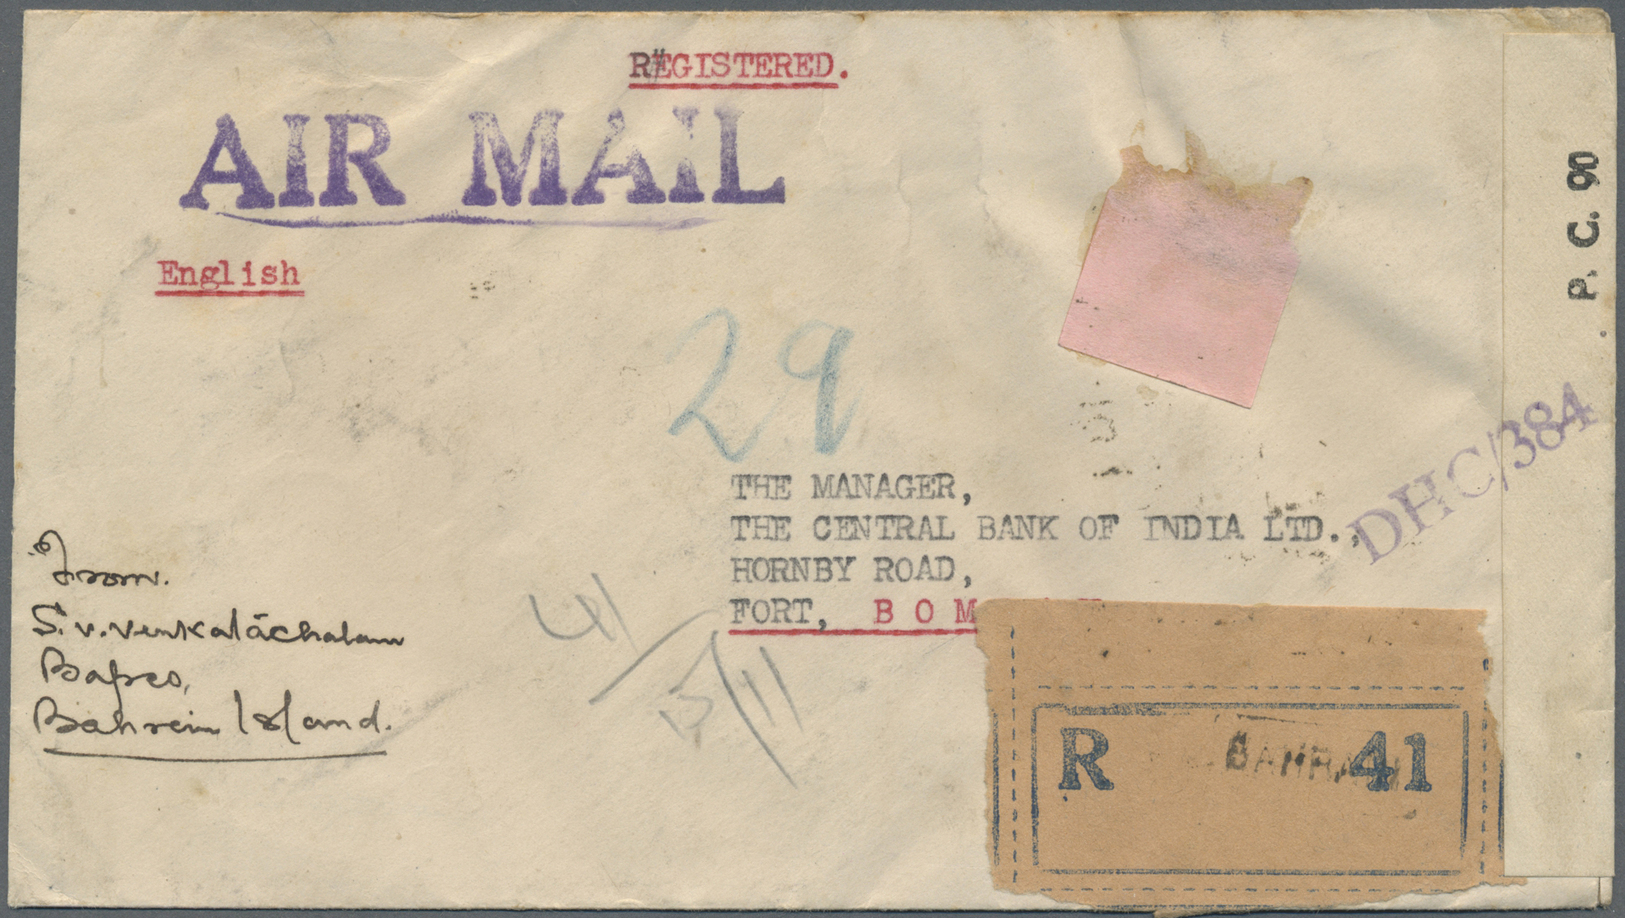 Br Bahrain: 1944. Registered Air Mail Envelope Addressed To India Bearing SG 23, 1a Carmine, SG 38, 3p Grey (2) And SG 3 - Bahreïn (1965-...)